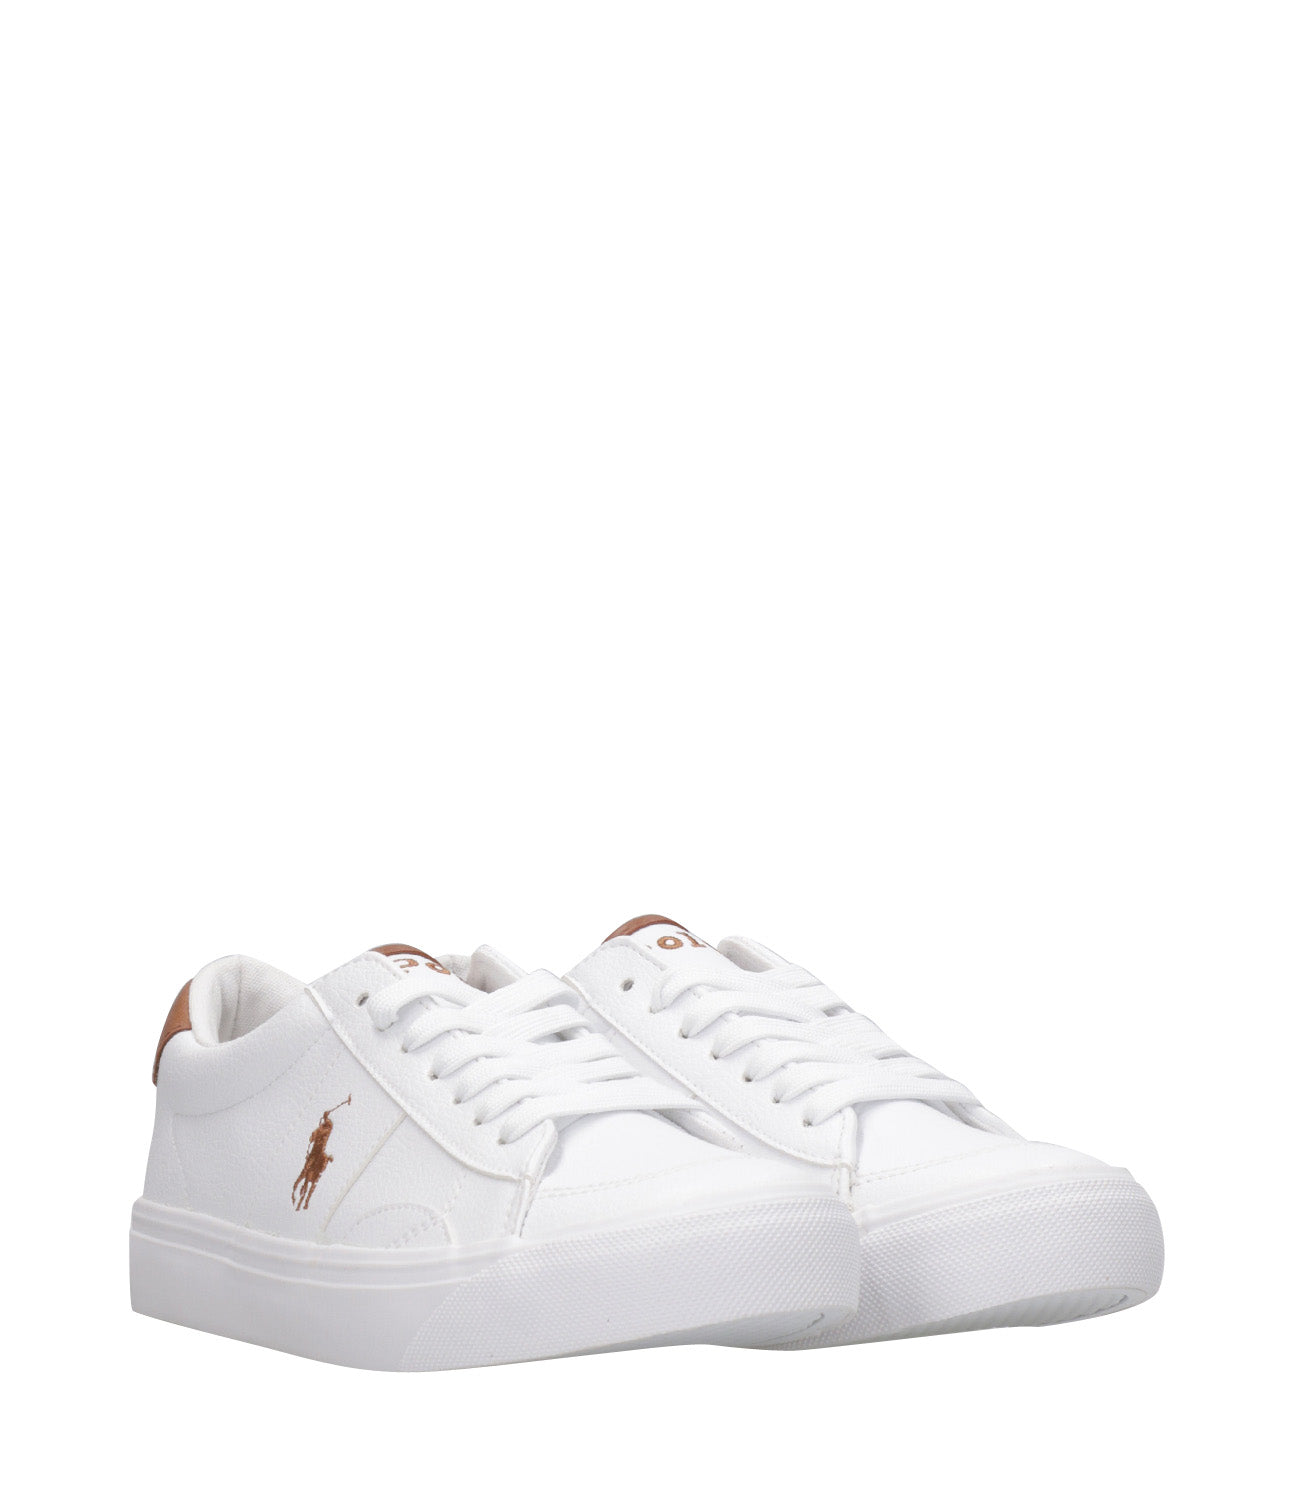 Ralph Lauren Childrenswear | Sneakers Bianco e Marrone